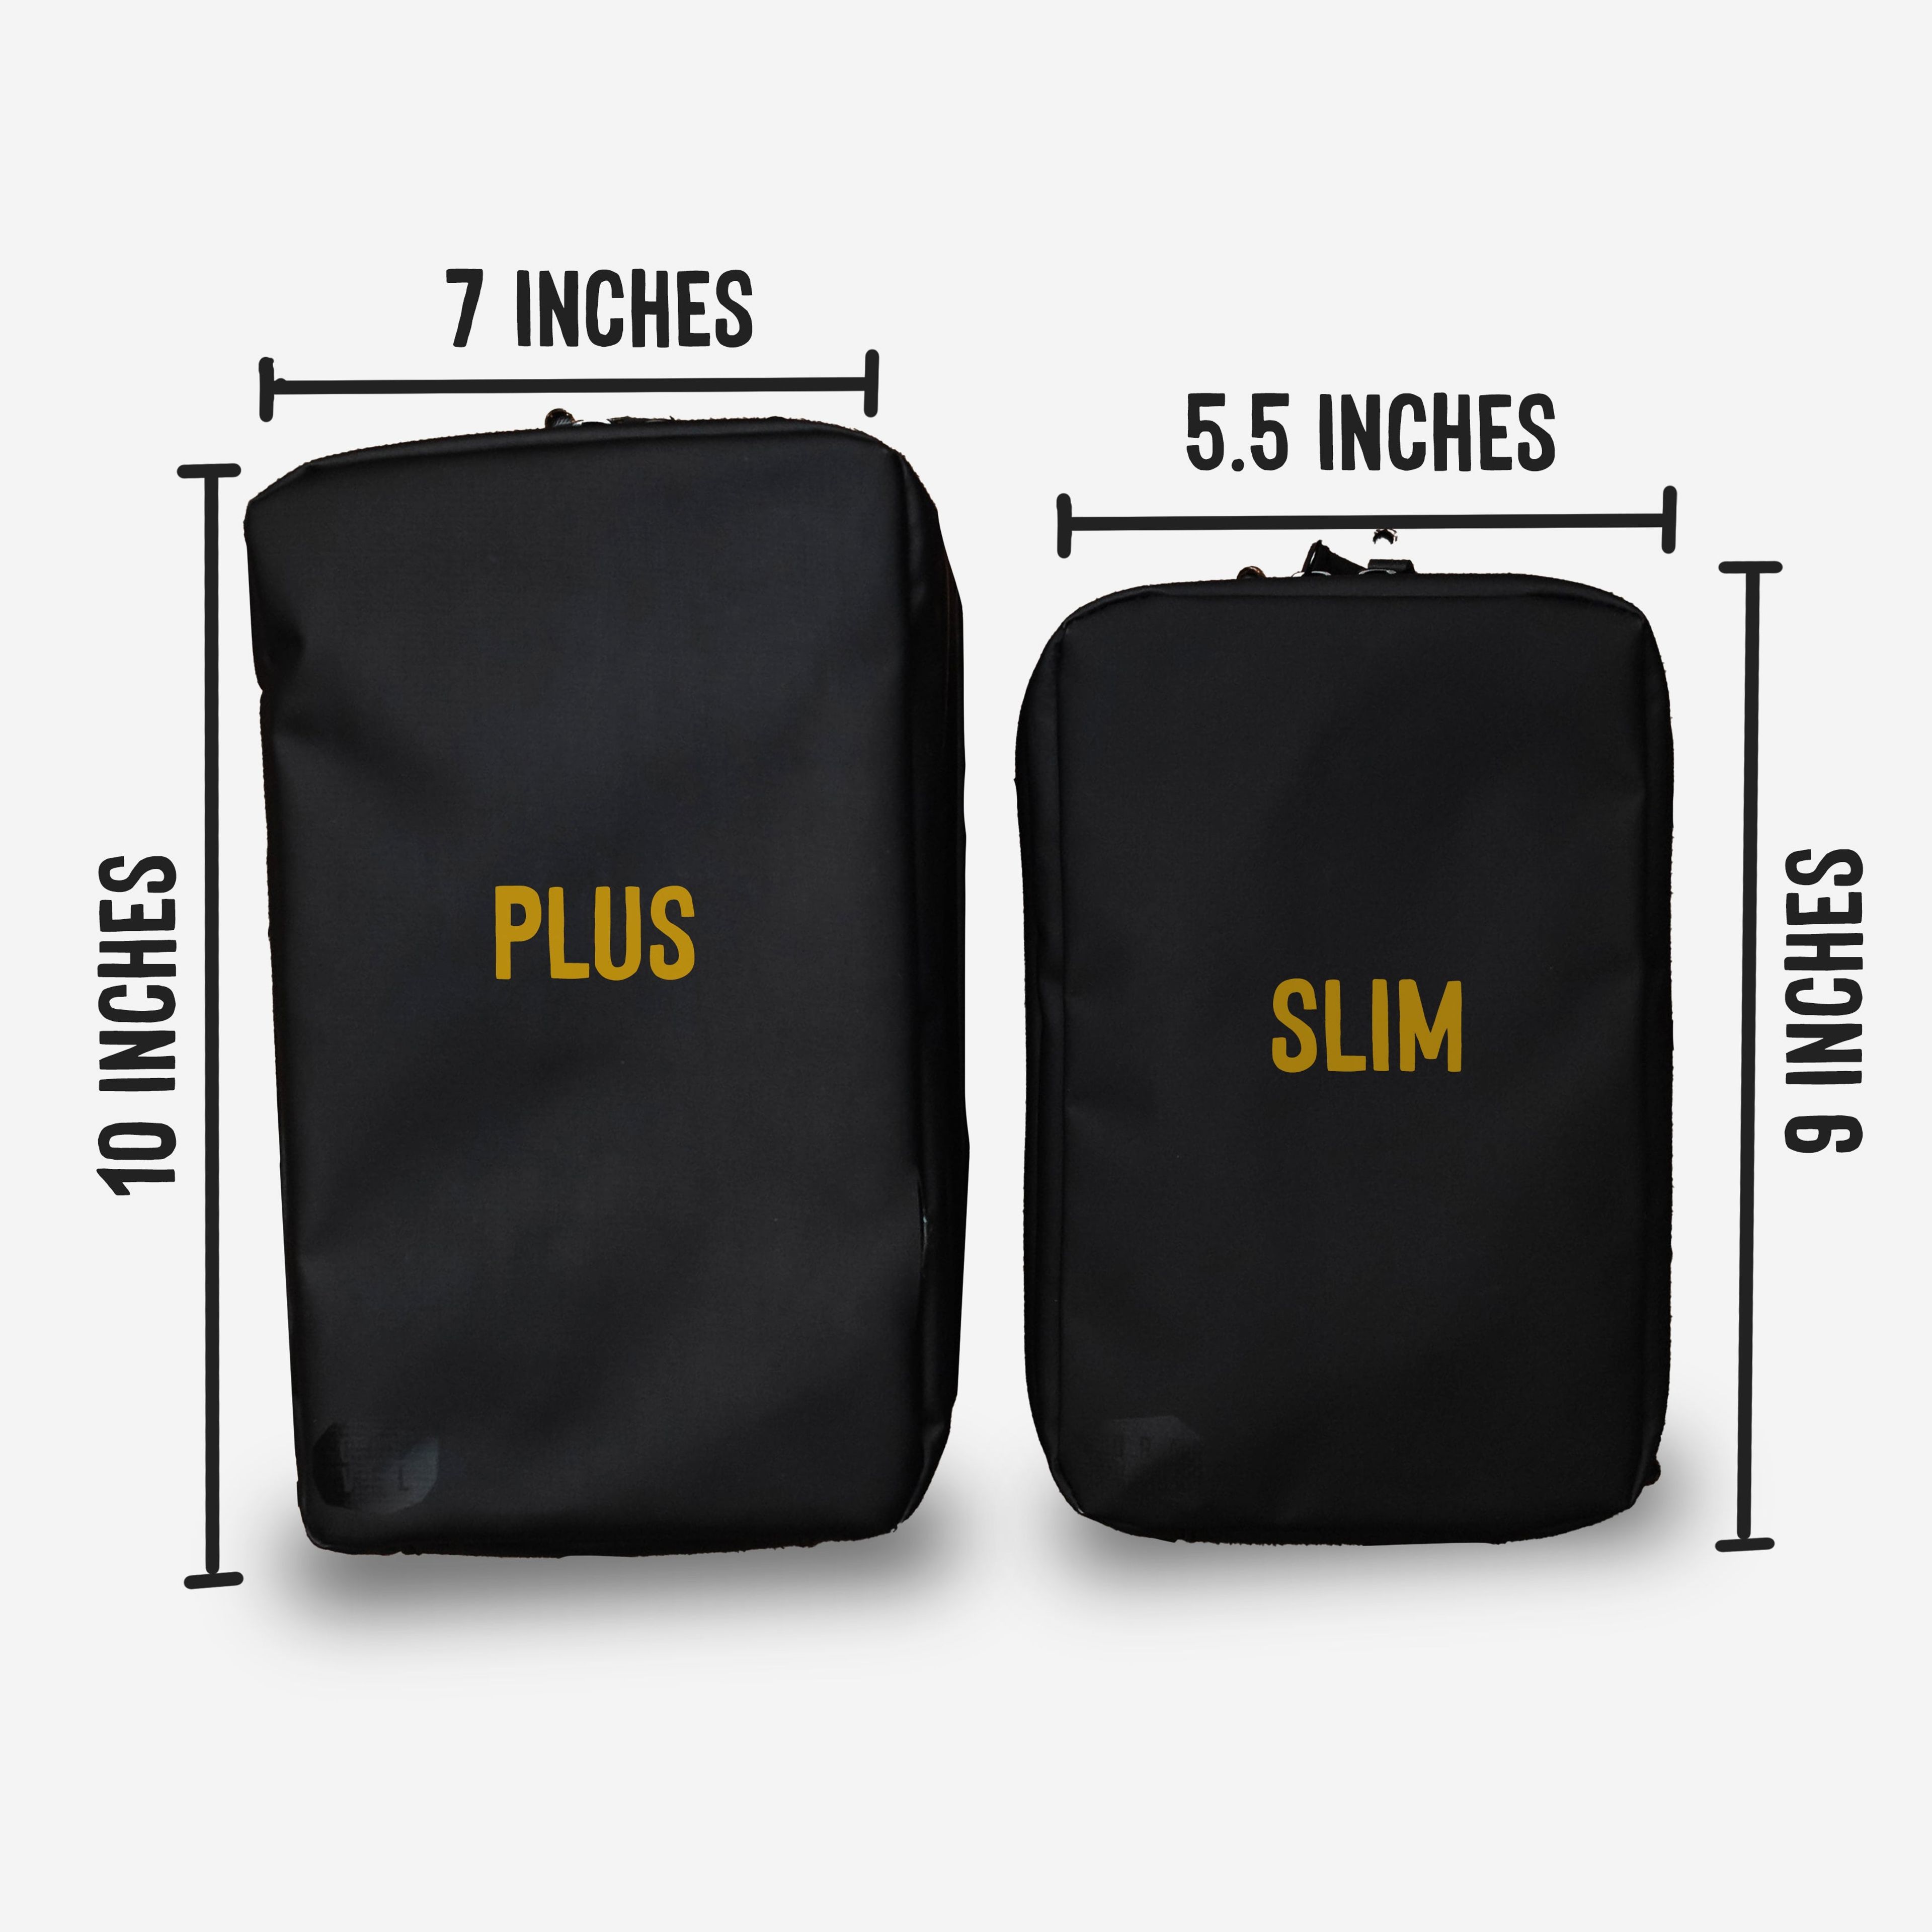 Black Explorer PLUS Toiletry Bag - Packing More